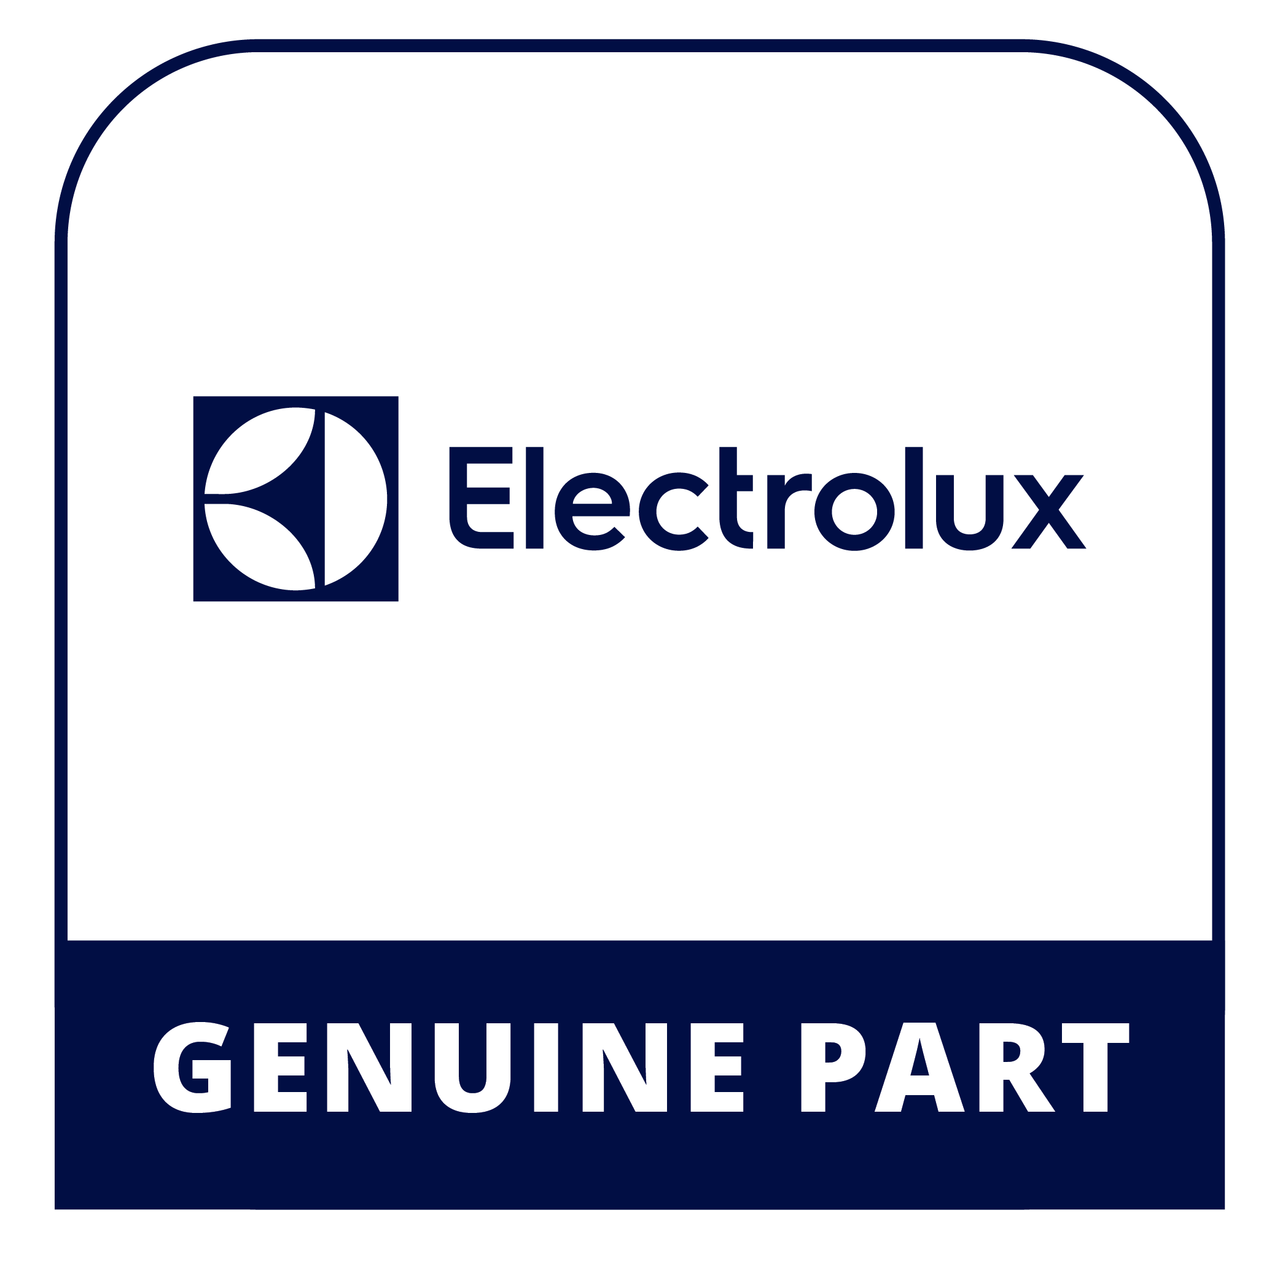 Frigidaire - Electrolux 316400143 Panel - Genuine Electrolux Part